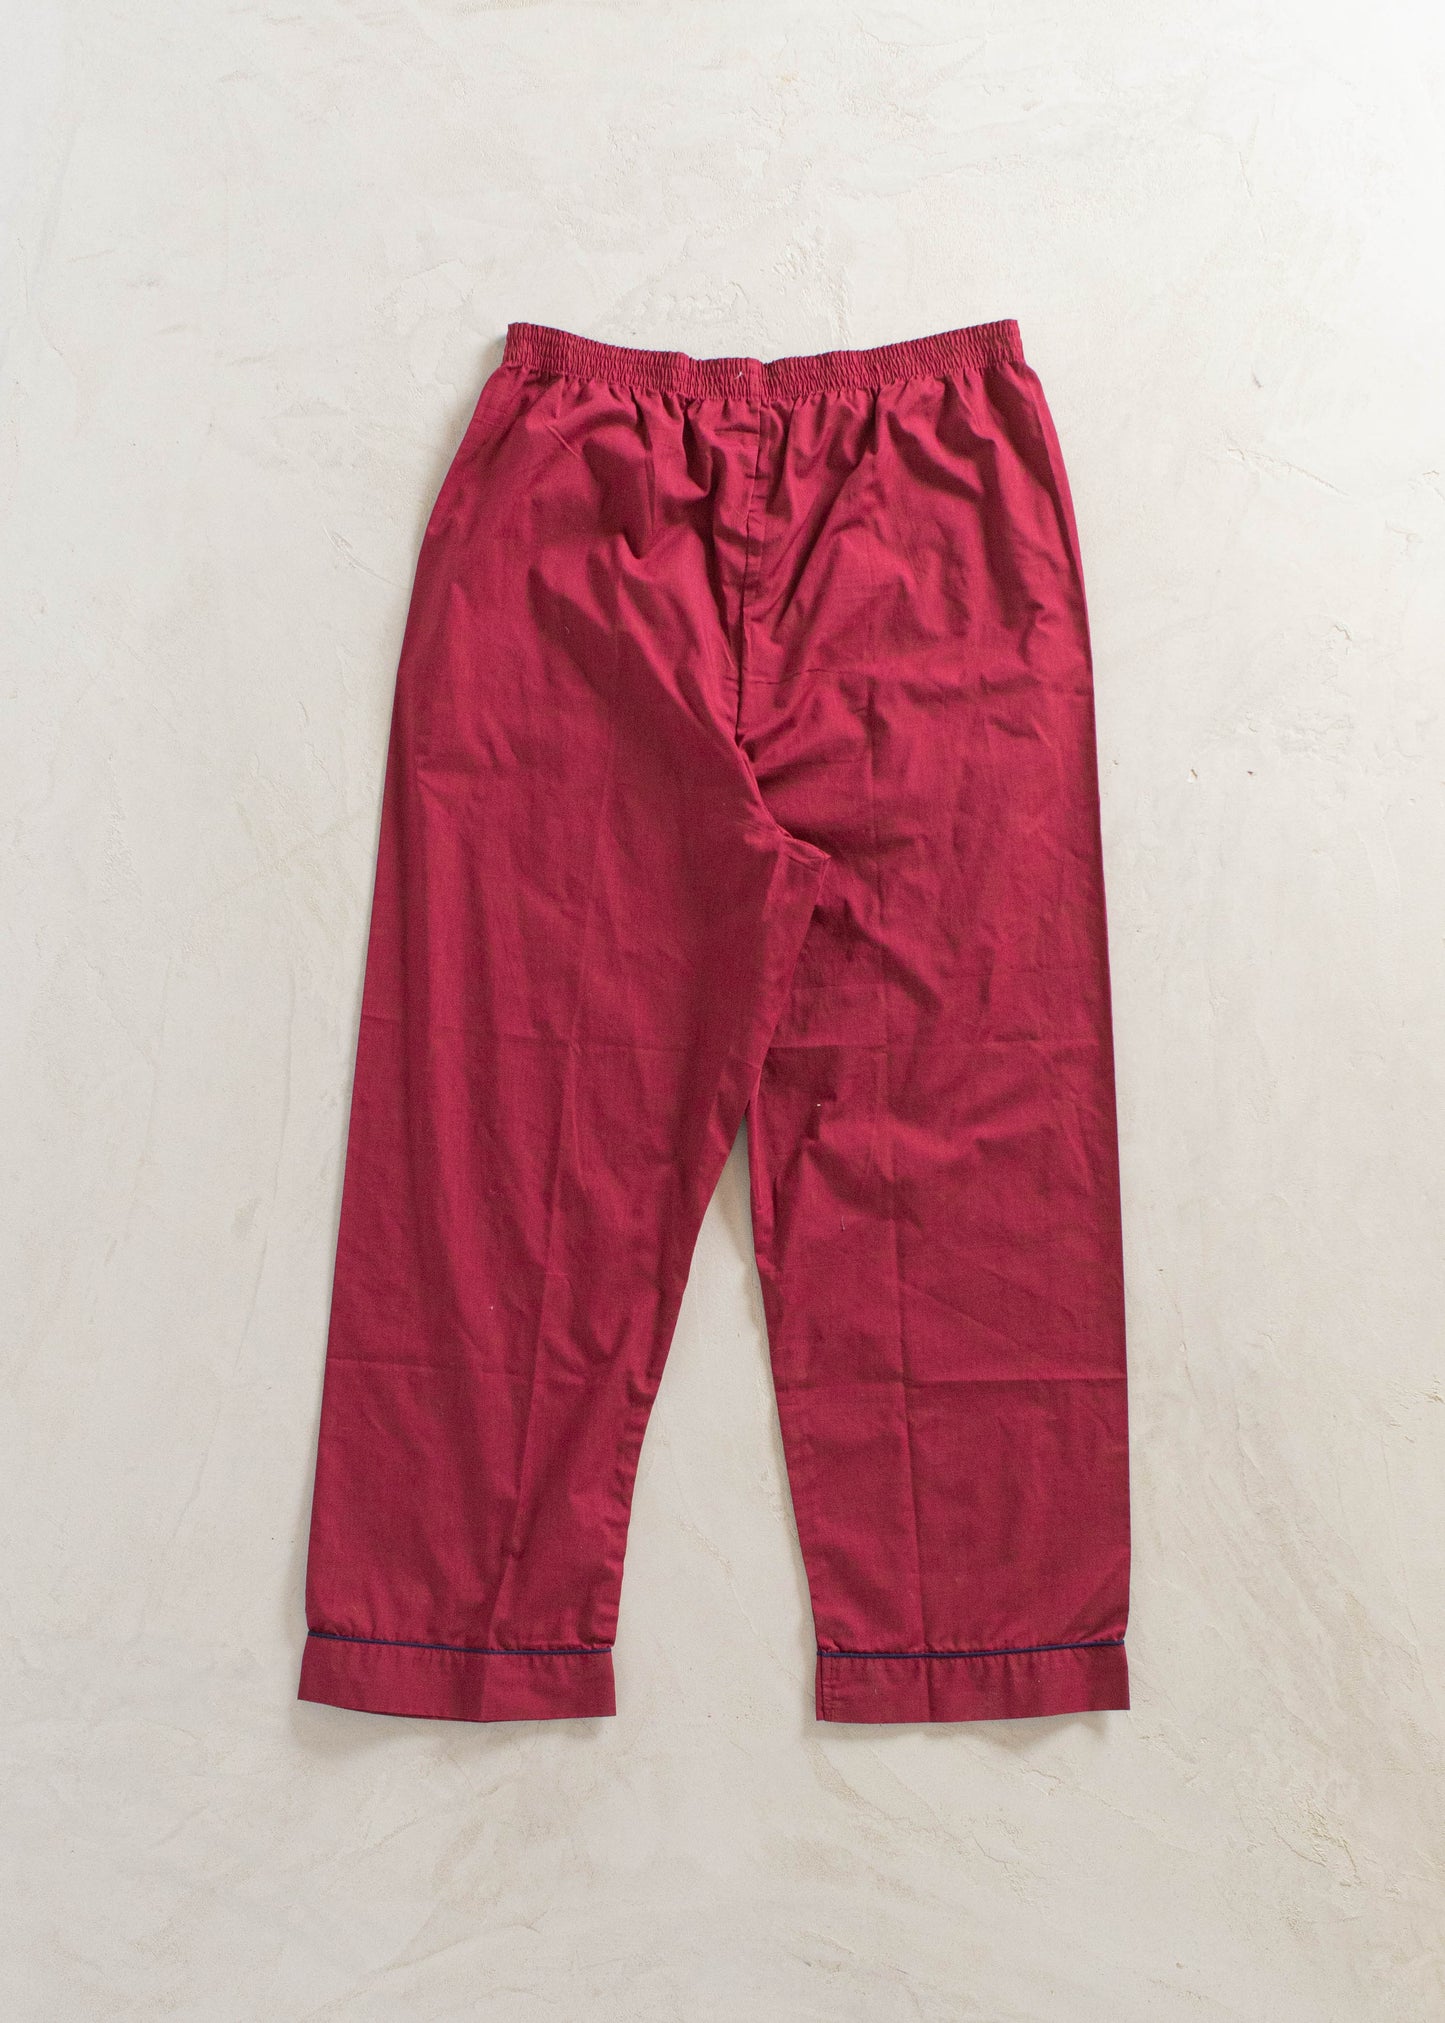 1980s Hemmingway Point Solid Burgundy Pajama Set Size M/L